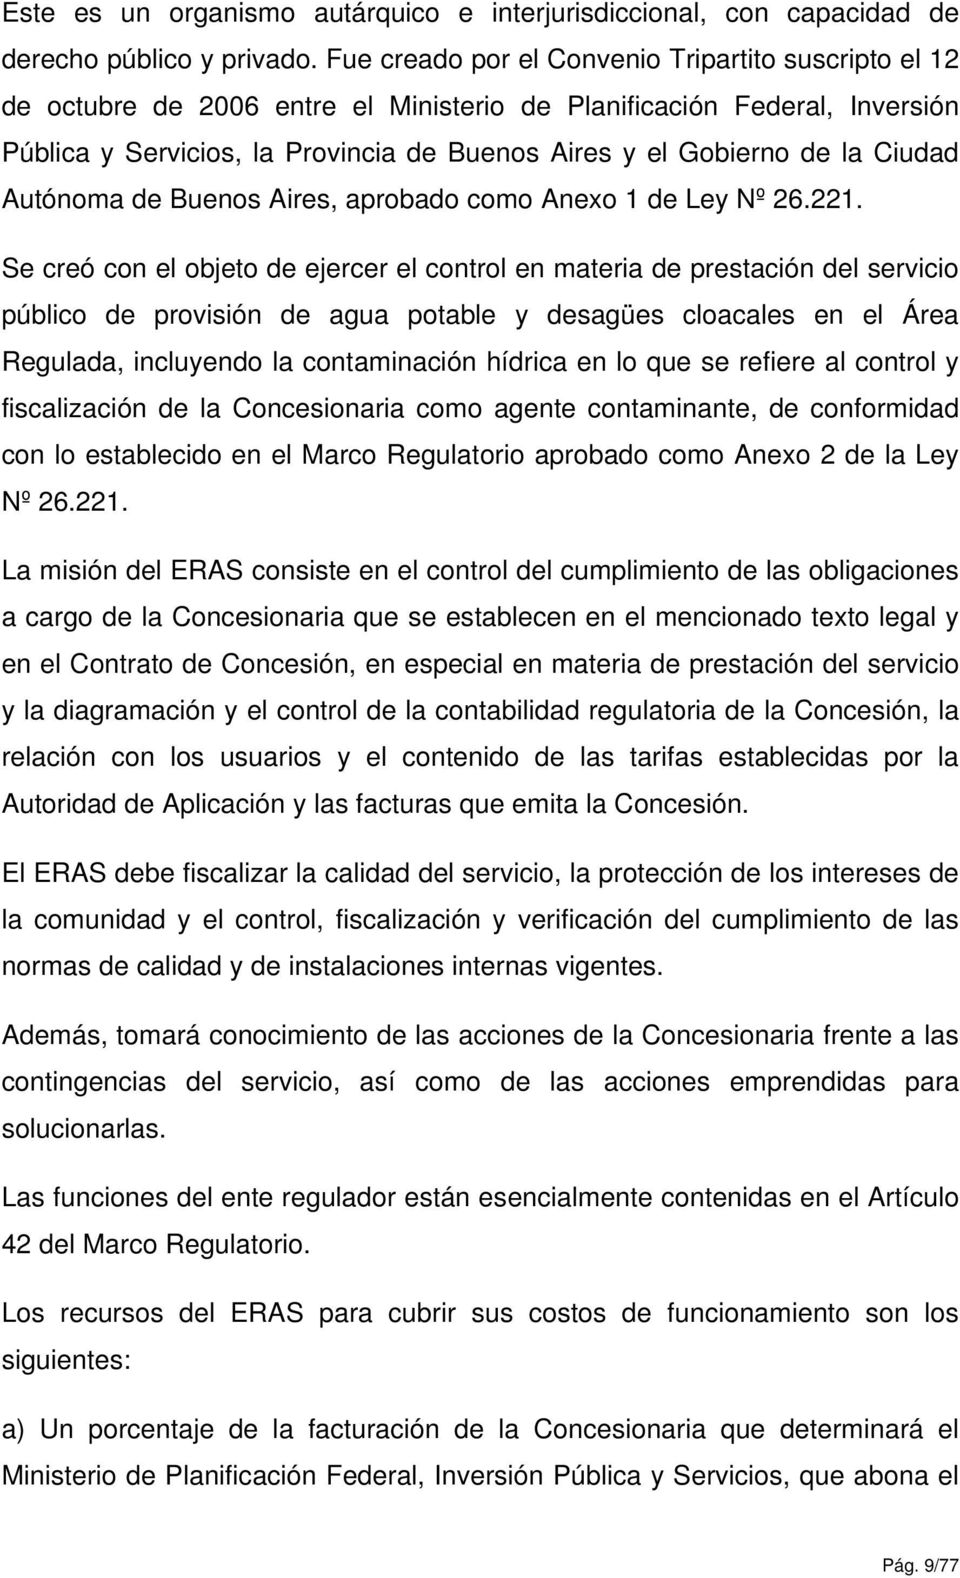 Ciudad Autónoma de Buenos Aires, aprobado como Anexo 1 de Ley Nº 26.221.